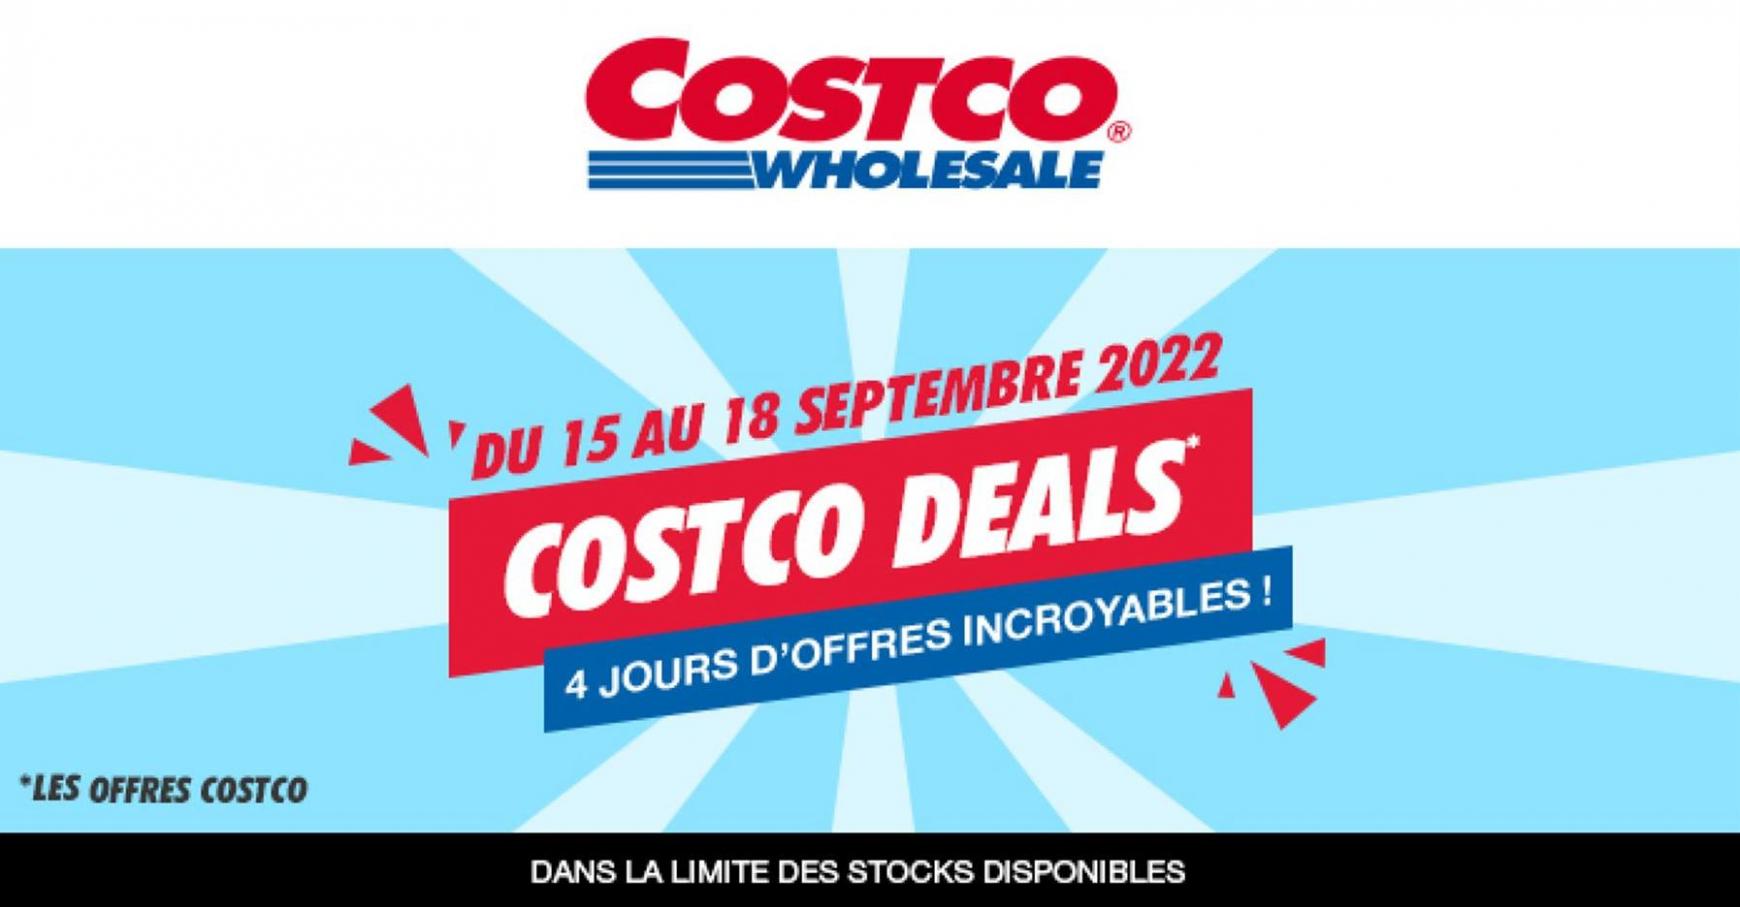 Costco Deals. Costco (2022-09-18-2022-09-18)